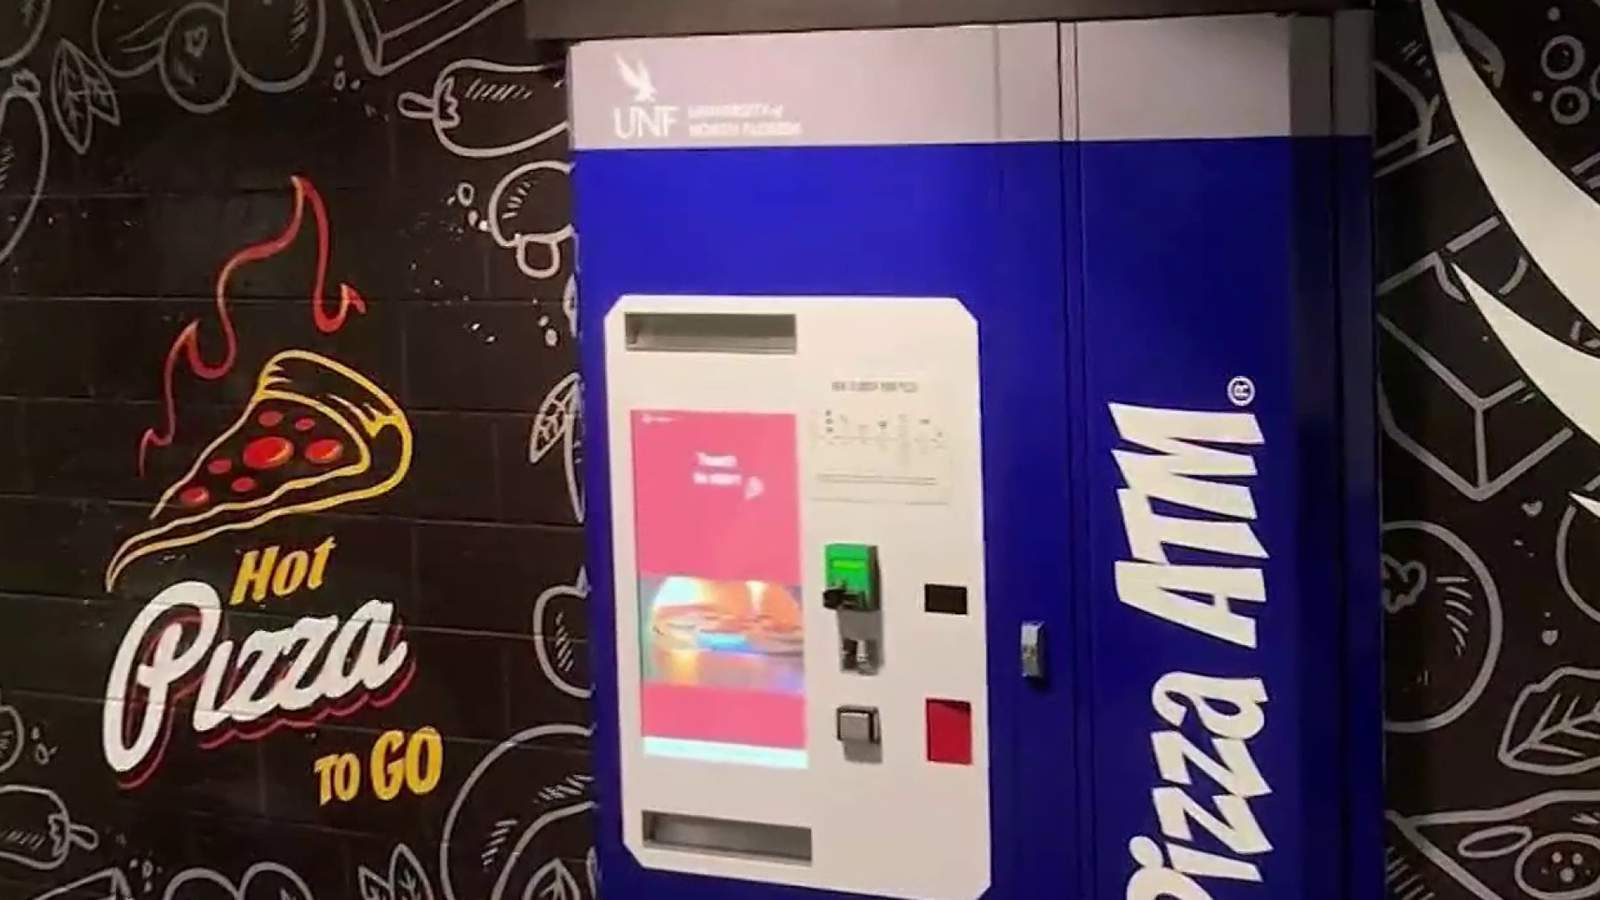 Florida university installs ATM -- for pizza